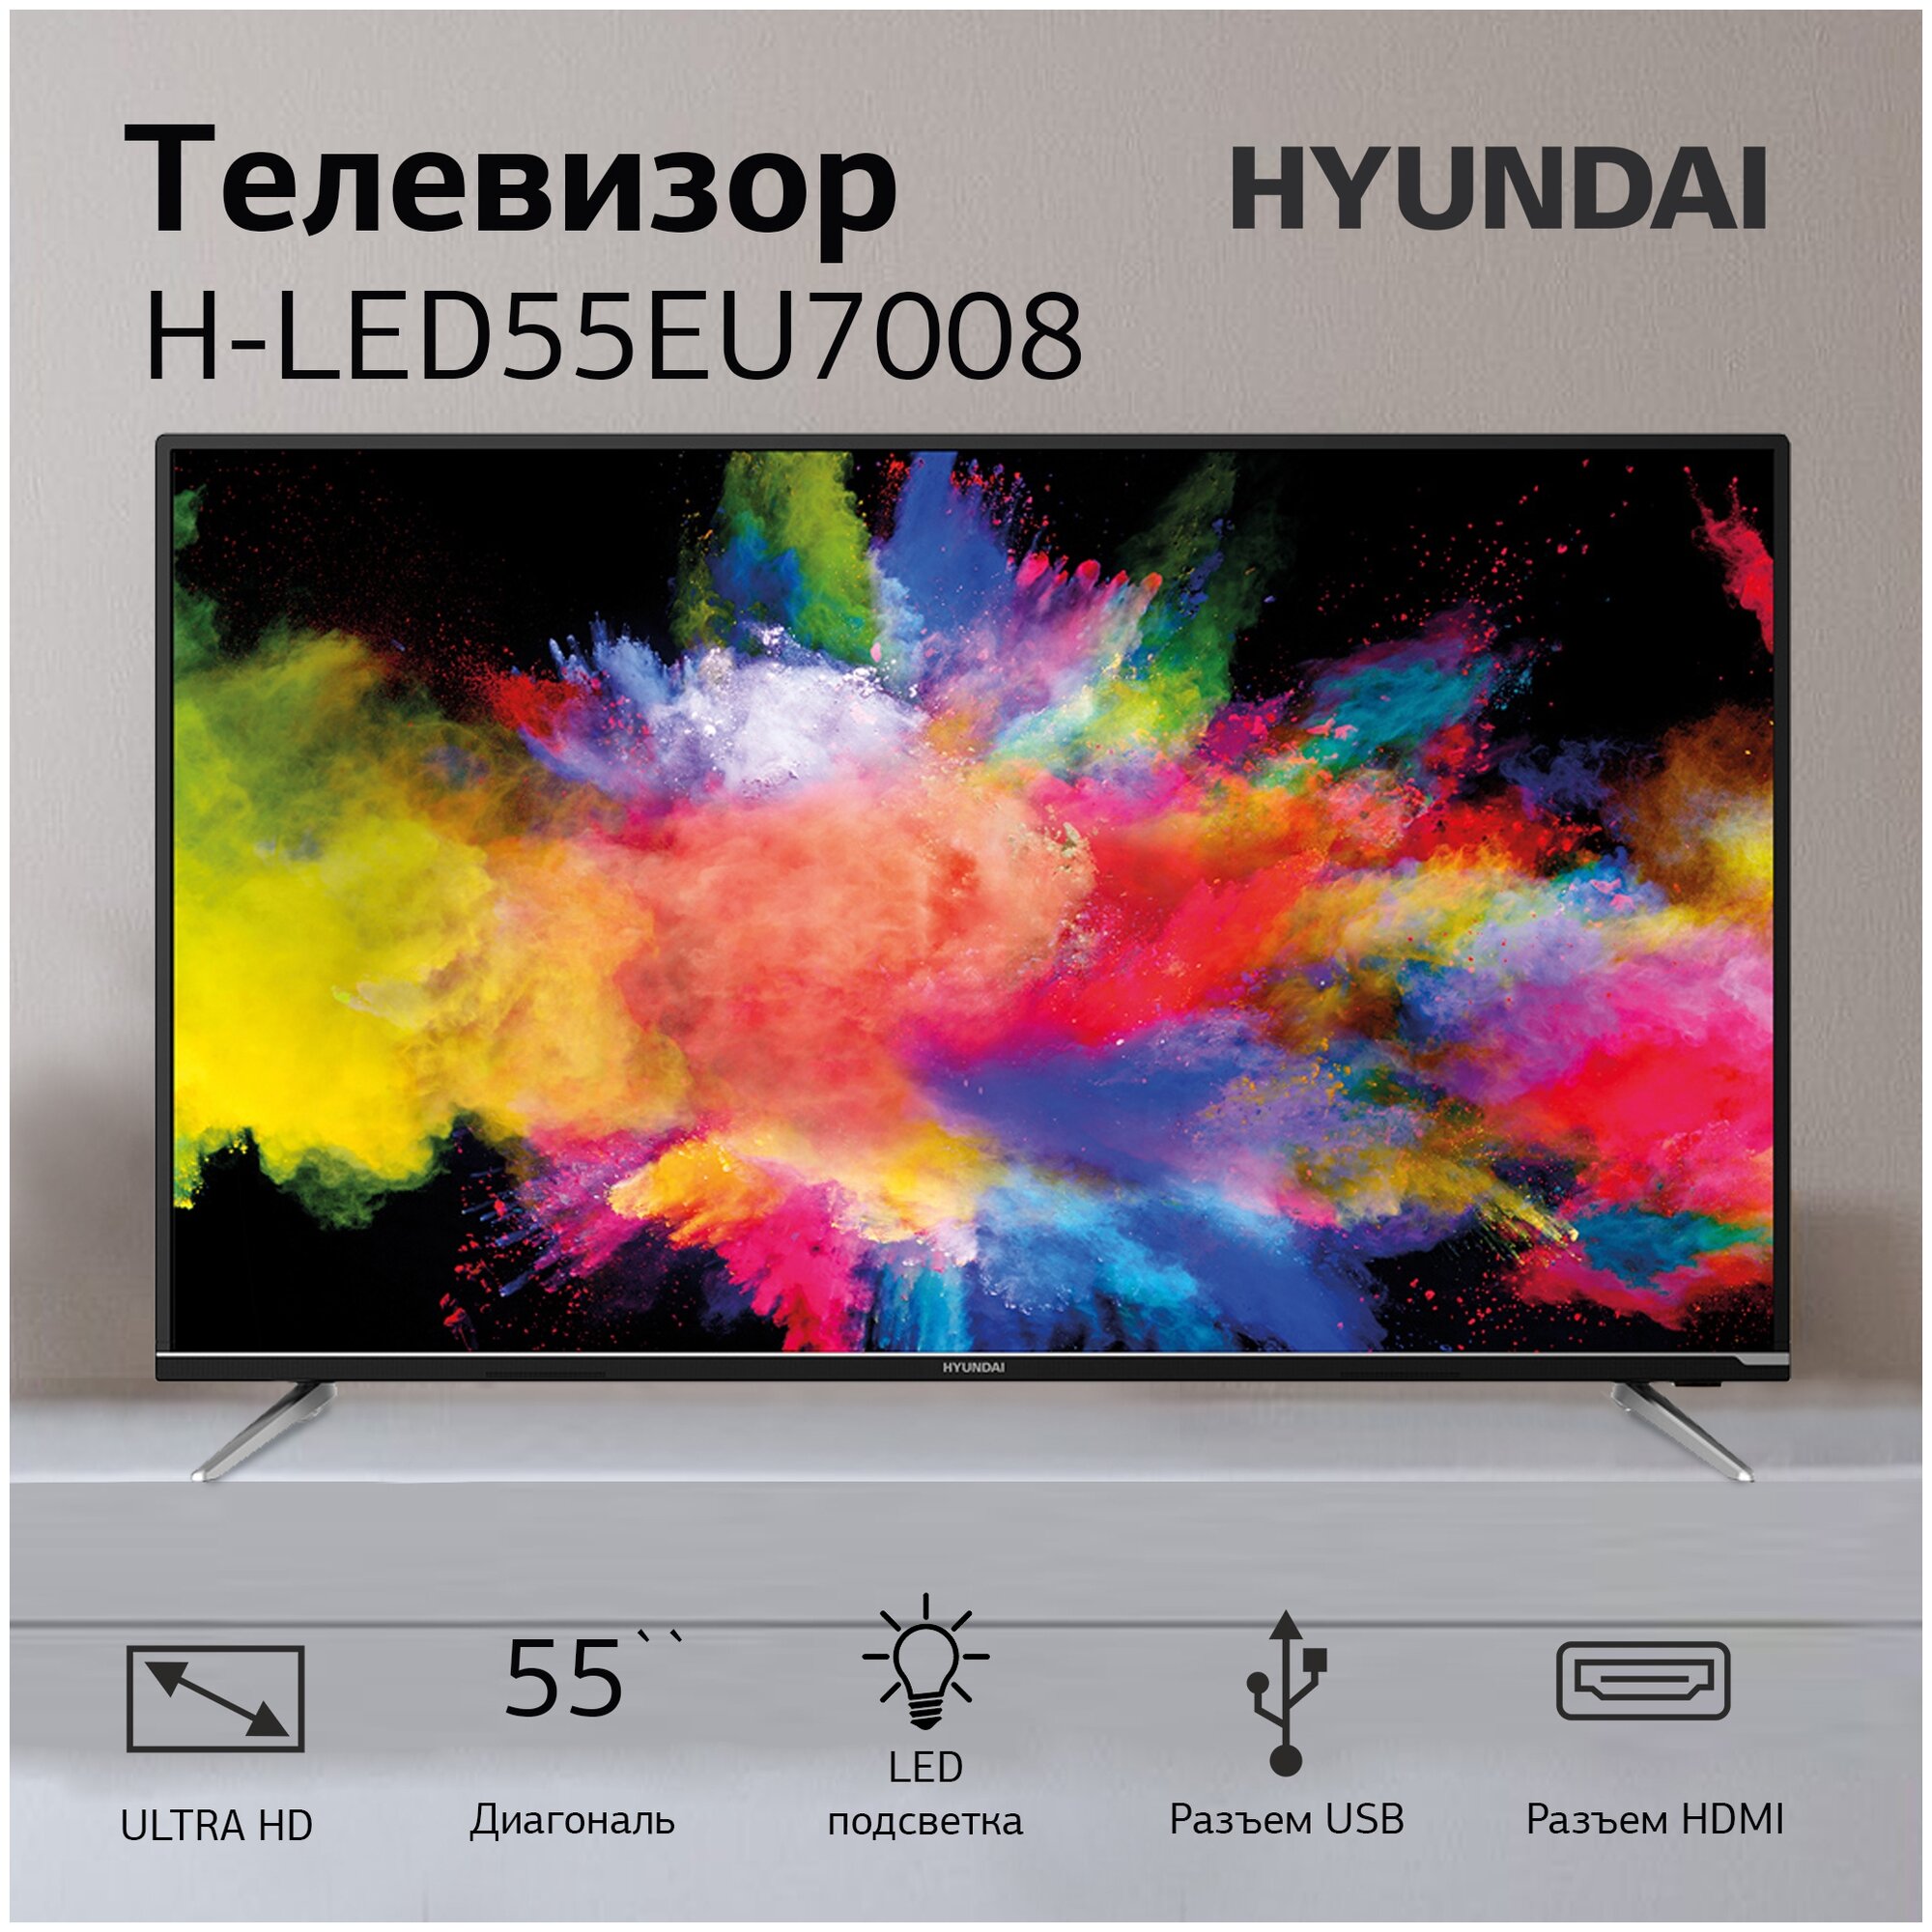 55" Телевизор Hyundai H-LED55EU7008 2019 LED, HDR, черный